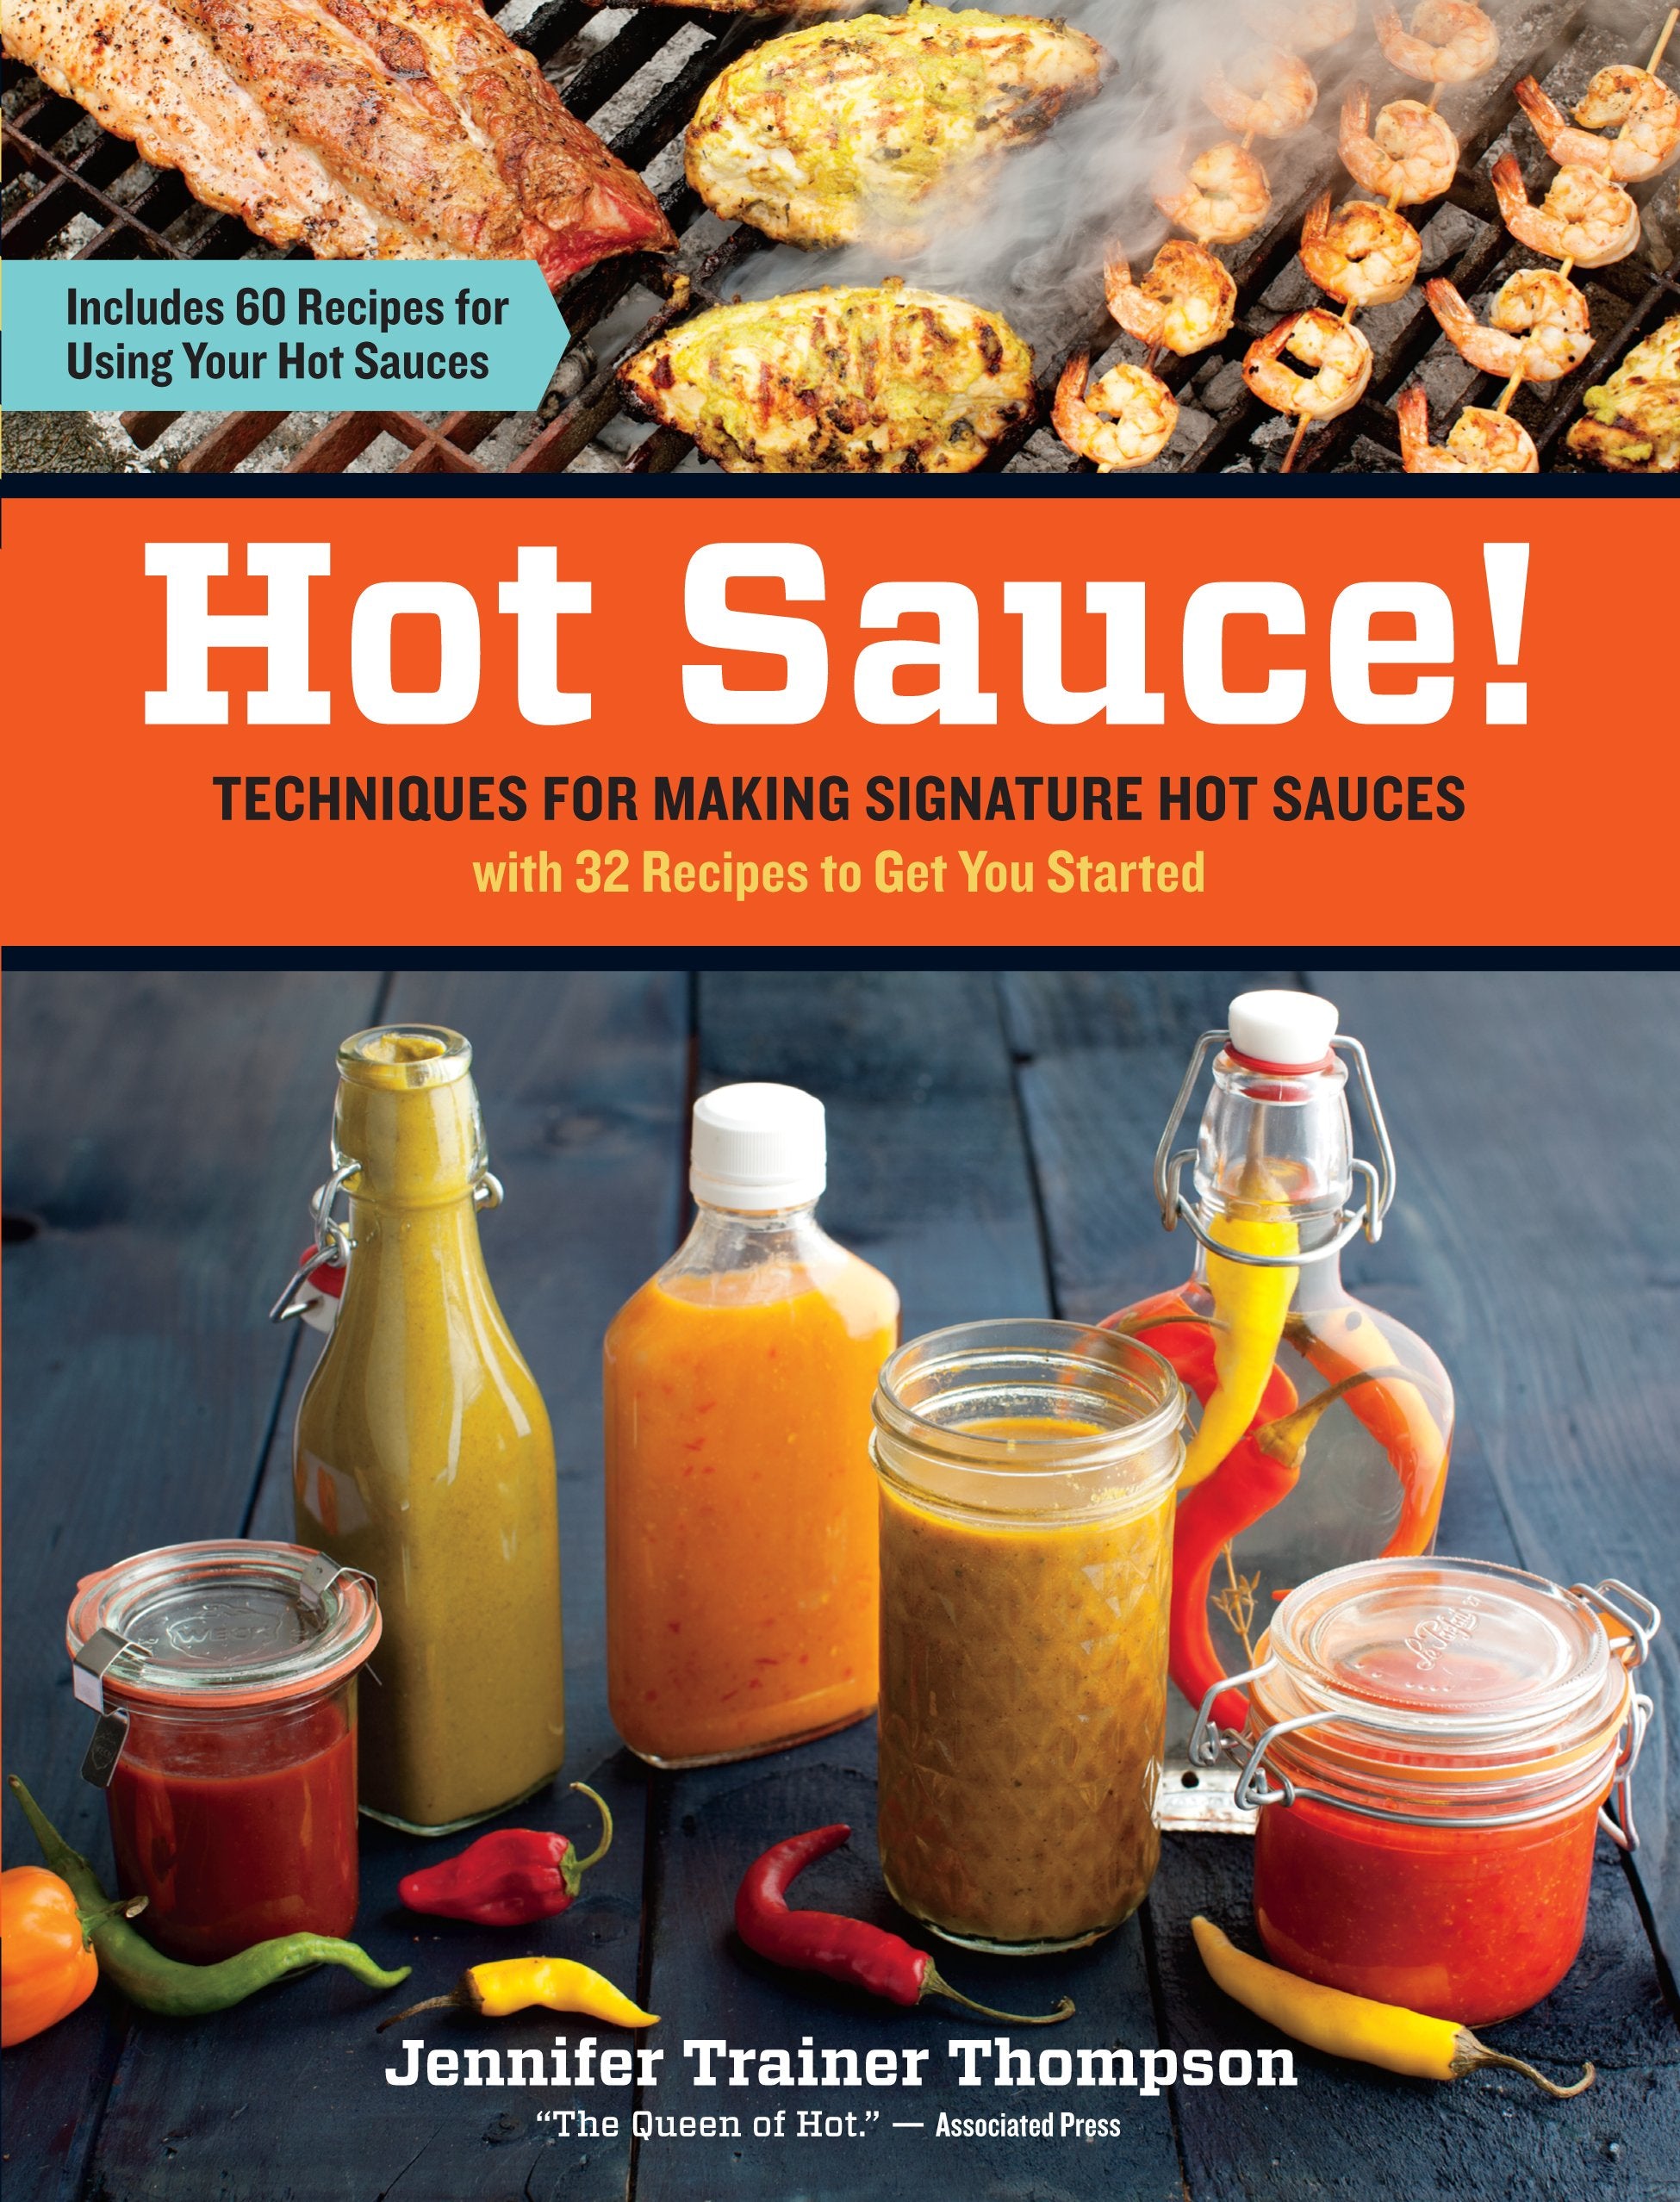 Hot Sauce!: Techniques for Making Signature Hot Sauces (Jennifer Trainer Thompson)